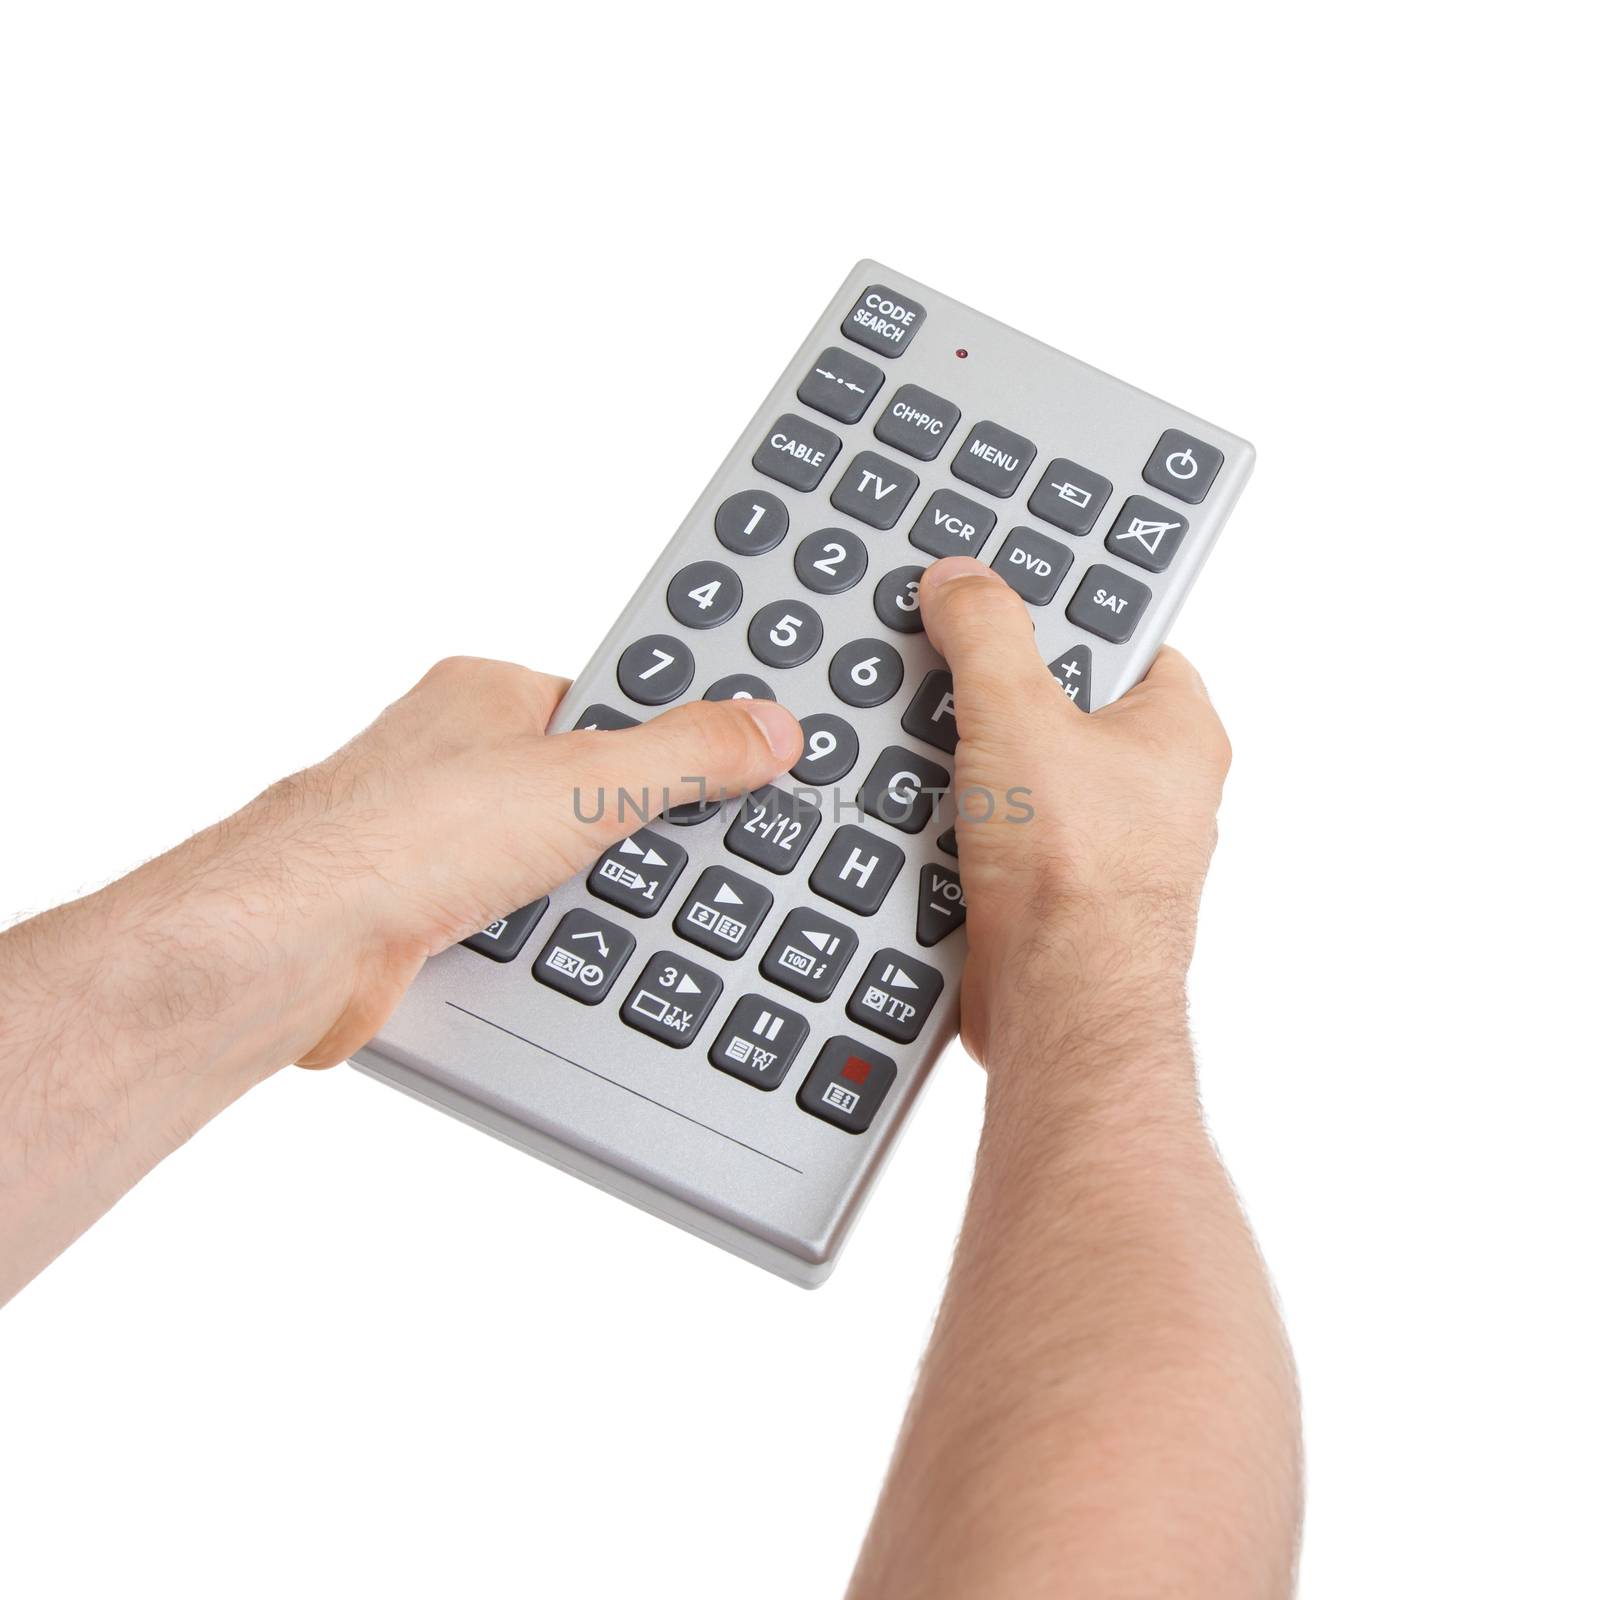 Media conceptual image - Unusual large remote control by michaklootwijk